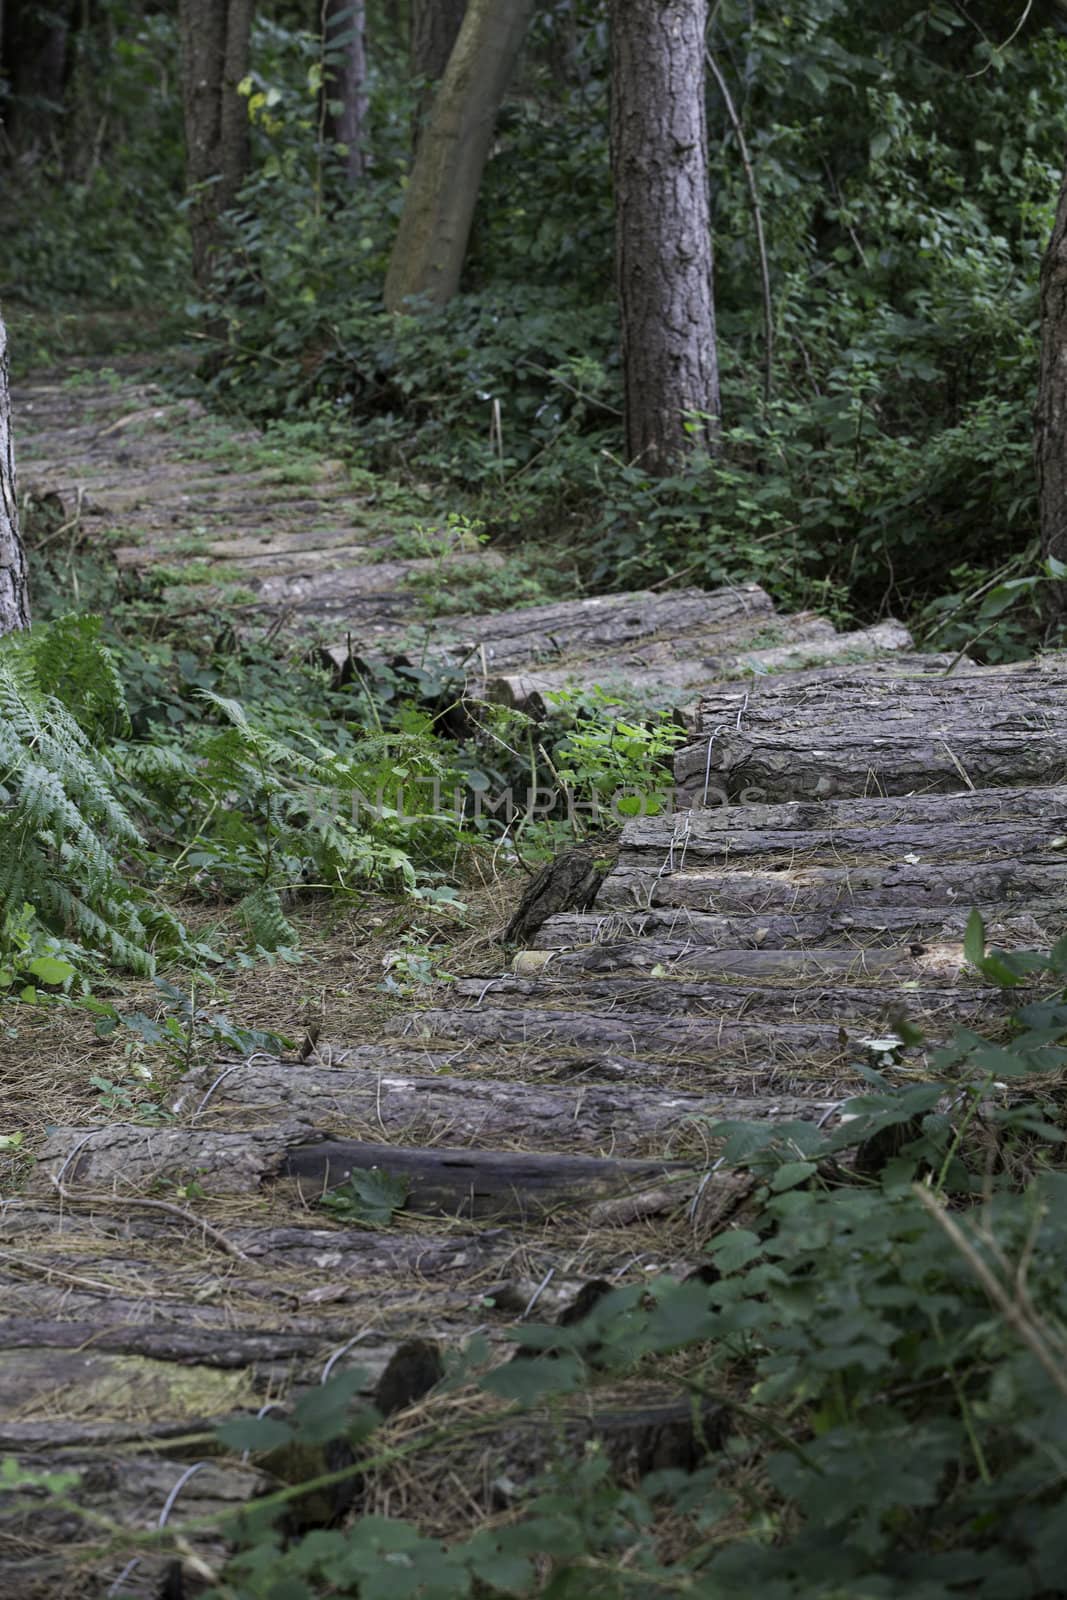 Rustic log path through forest by jrock635